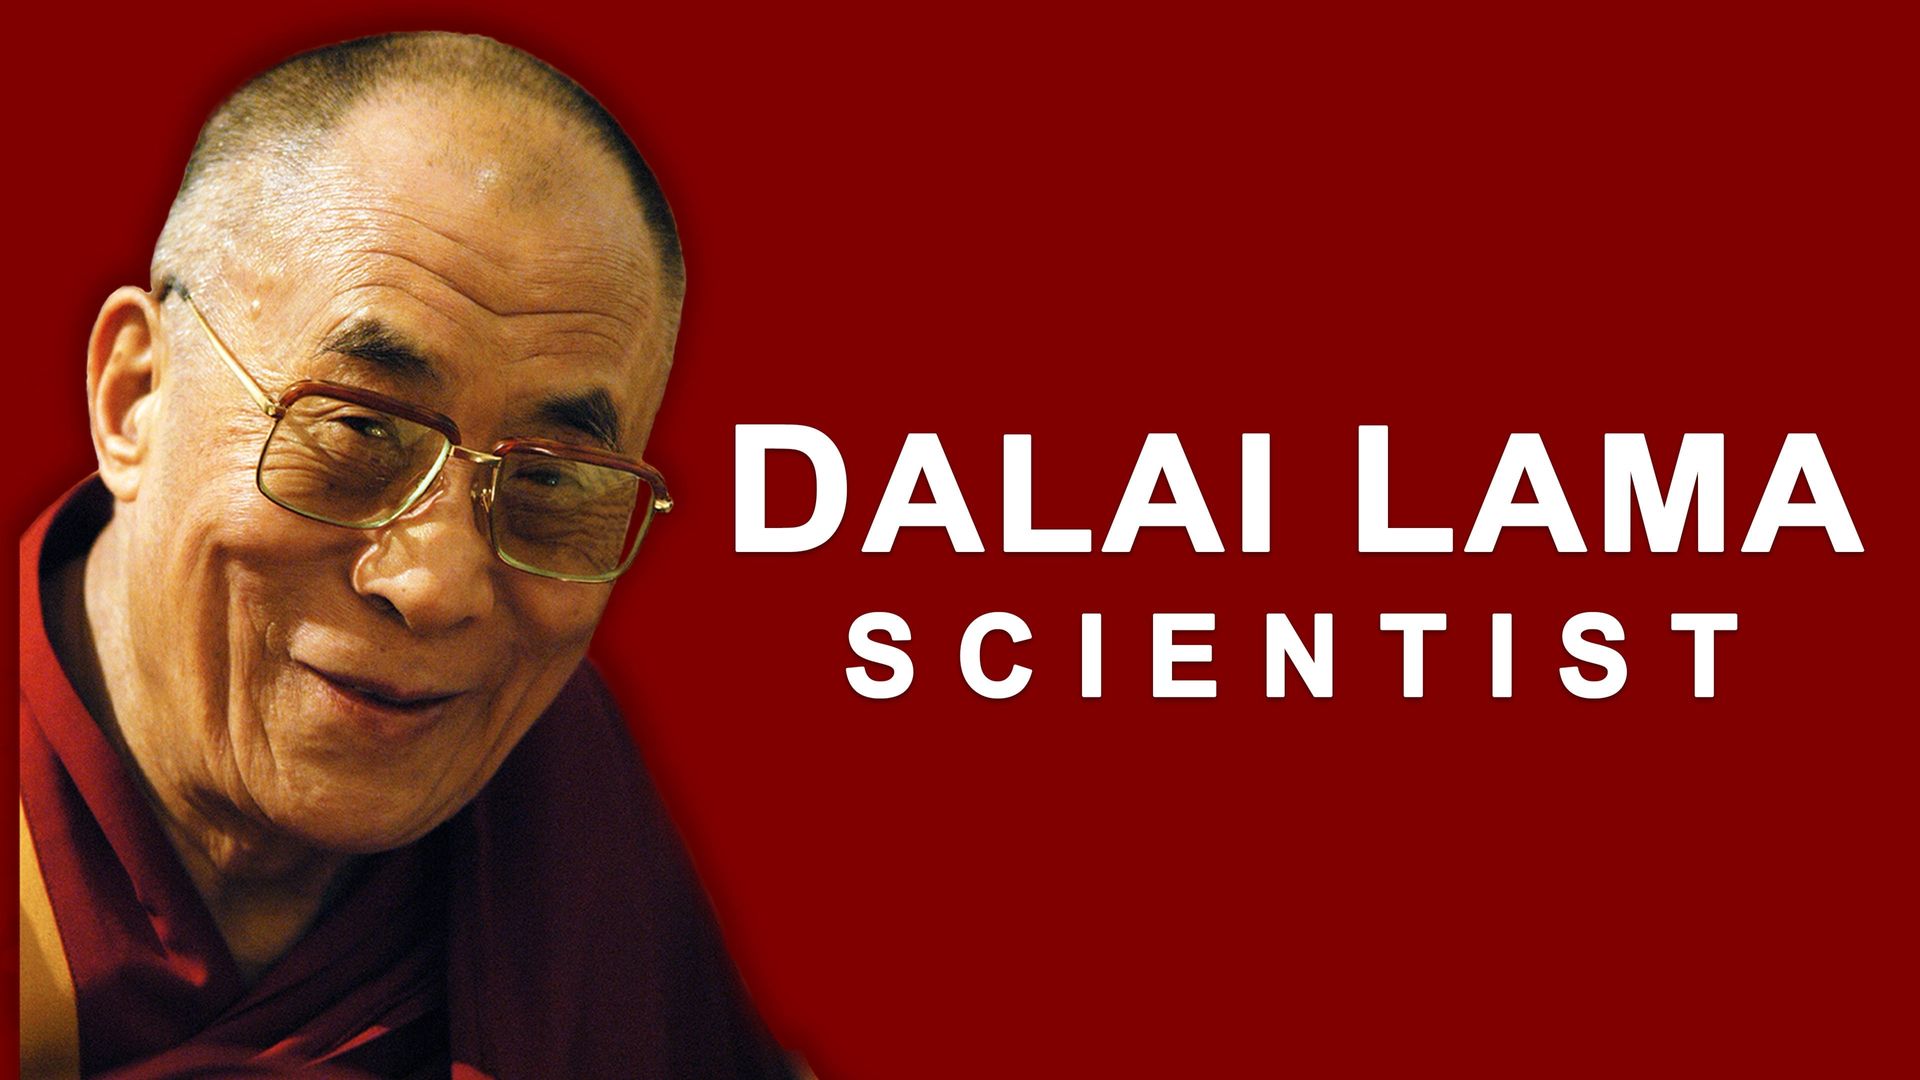 The Dalai Lama: Scientist background